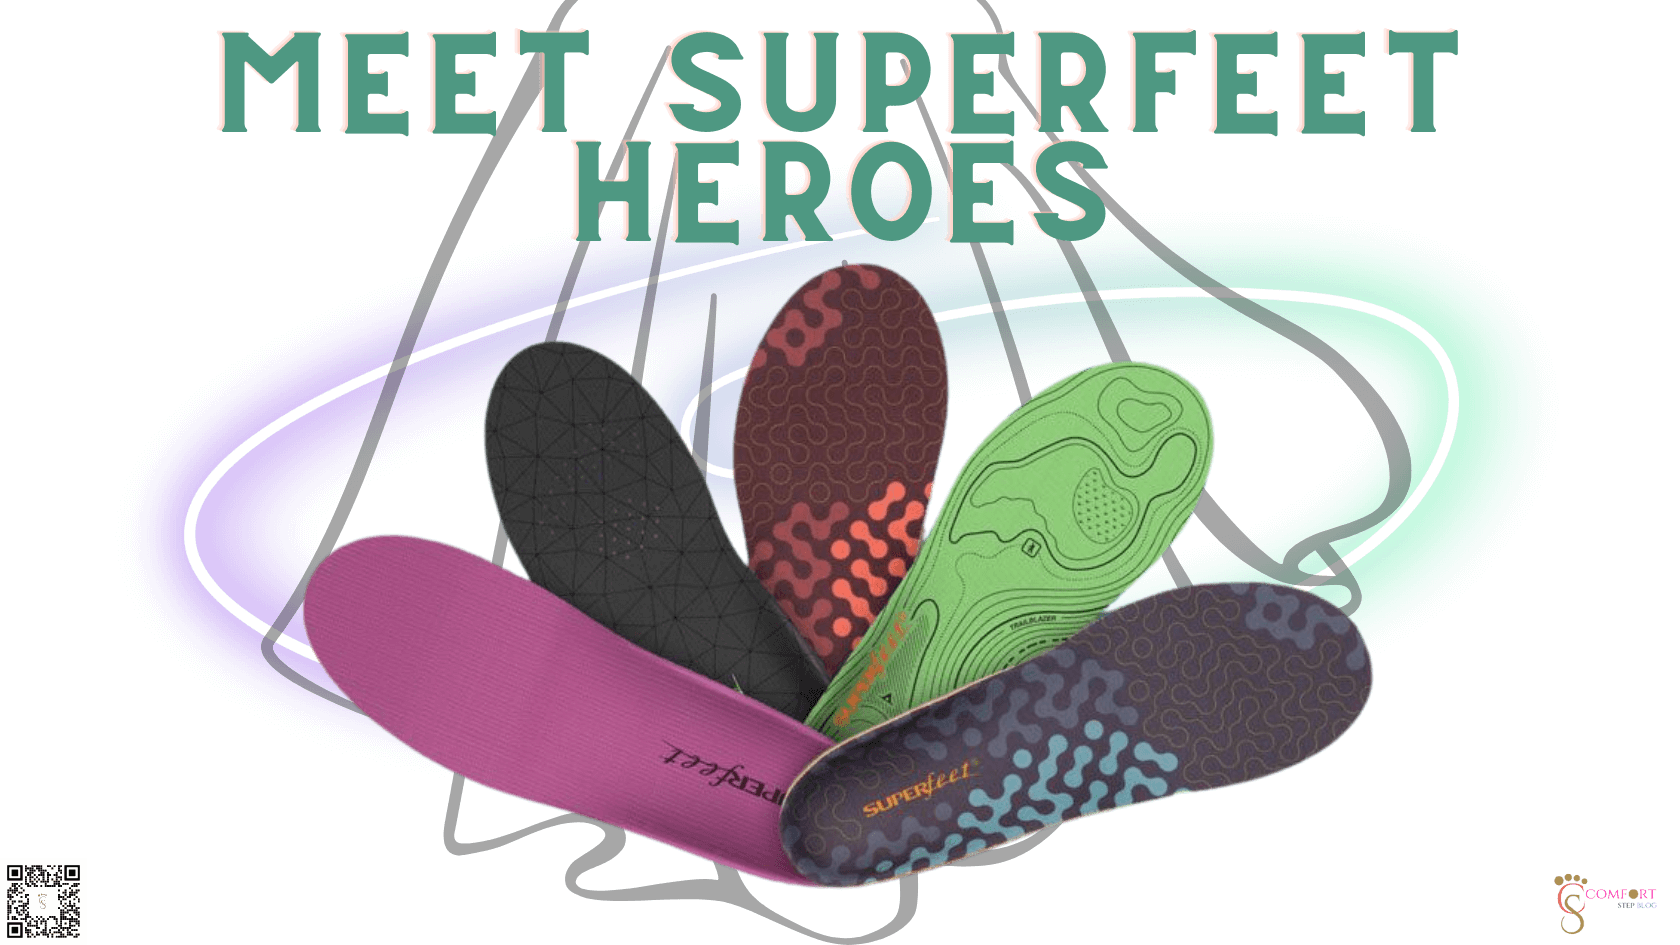 Meet Superfeet Heroes